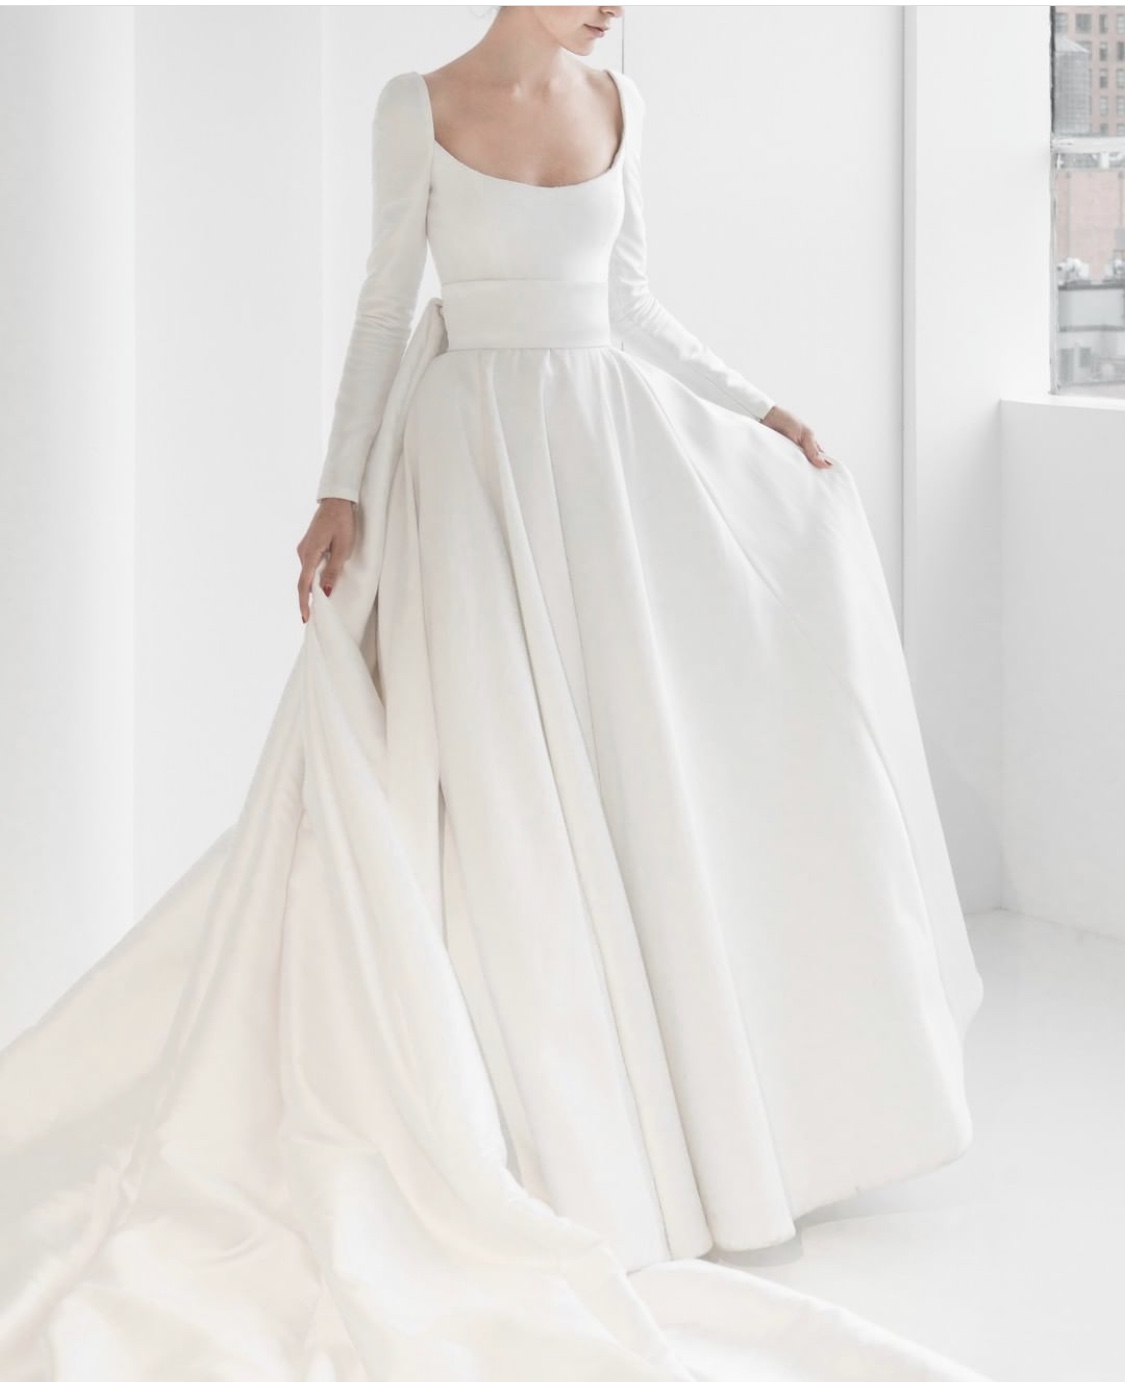 adrian wedding dress